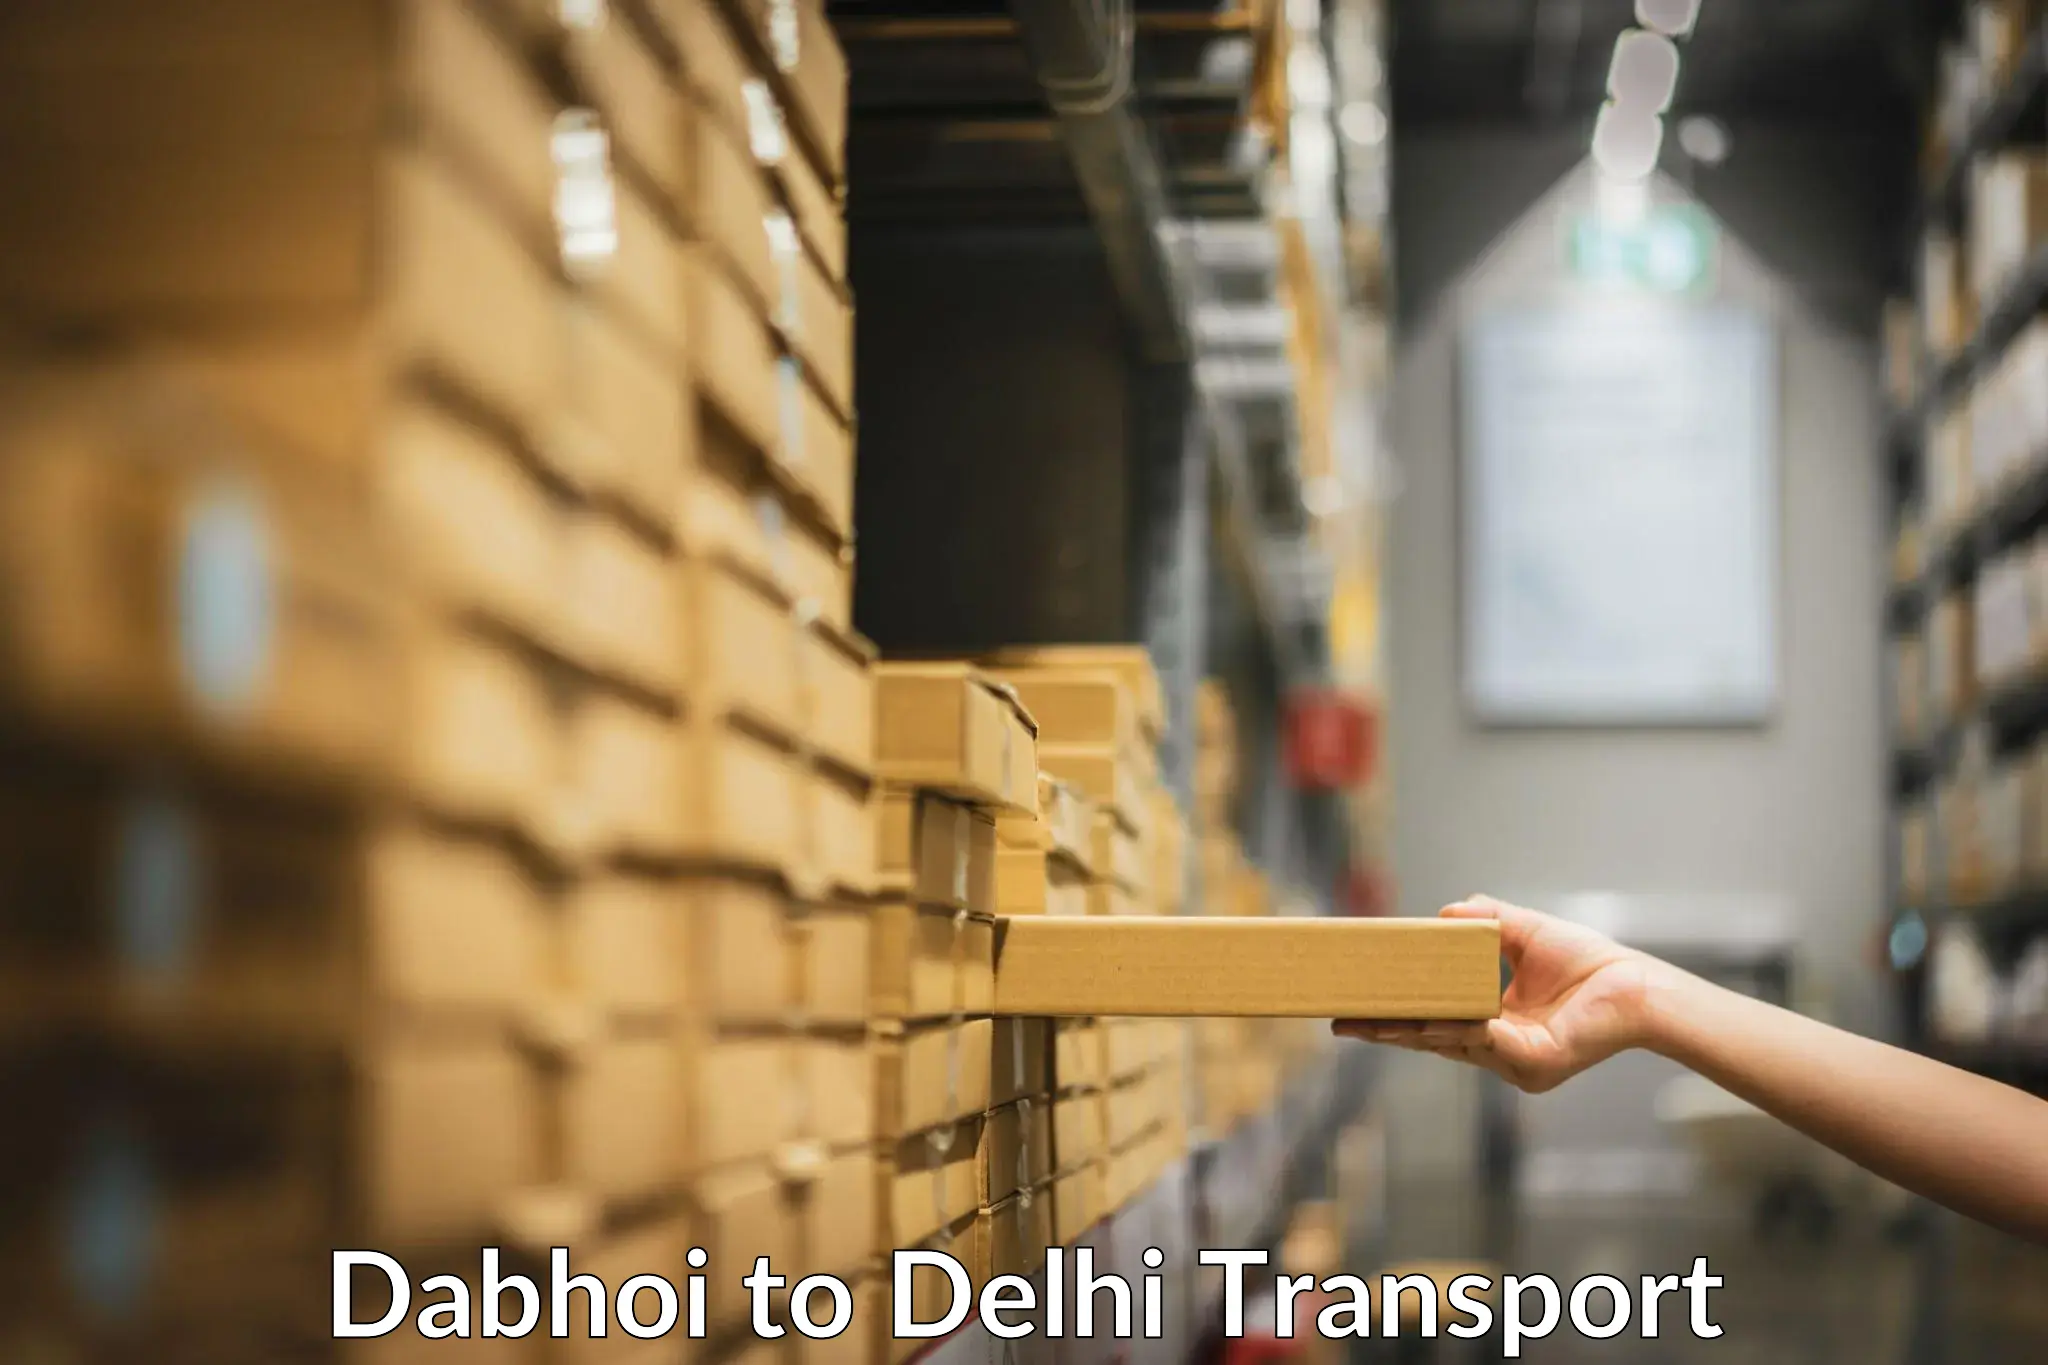 Shipping partner Dabhoi to NCR